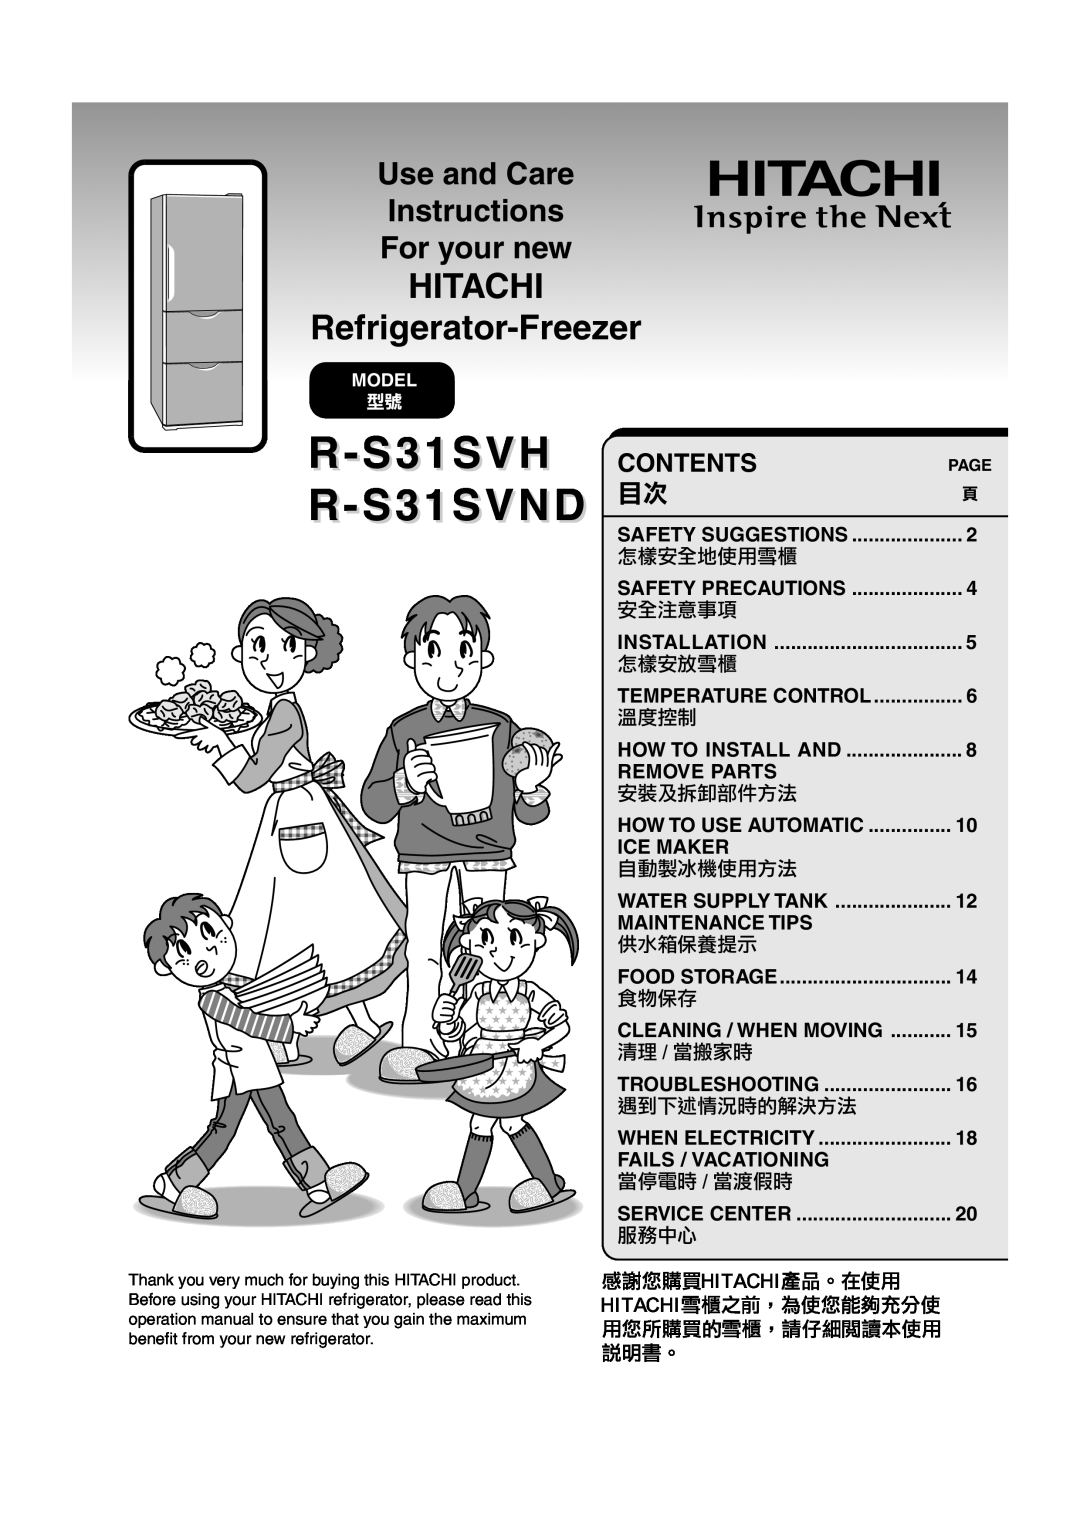 Hitachi refrigerator-freezer operation manual R-S31SVH R-S31SVND, HITACHI Refrigerator-Freezer, Contents,  !#$%, =L= 